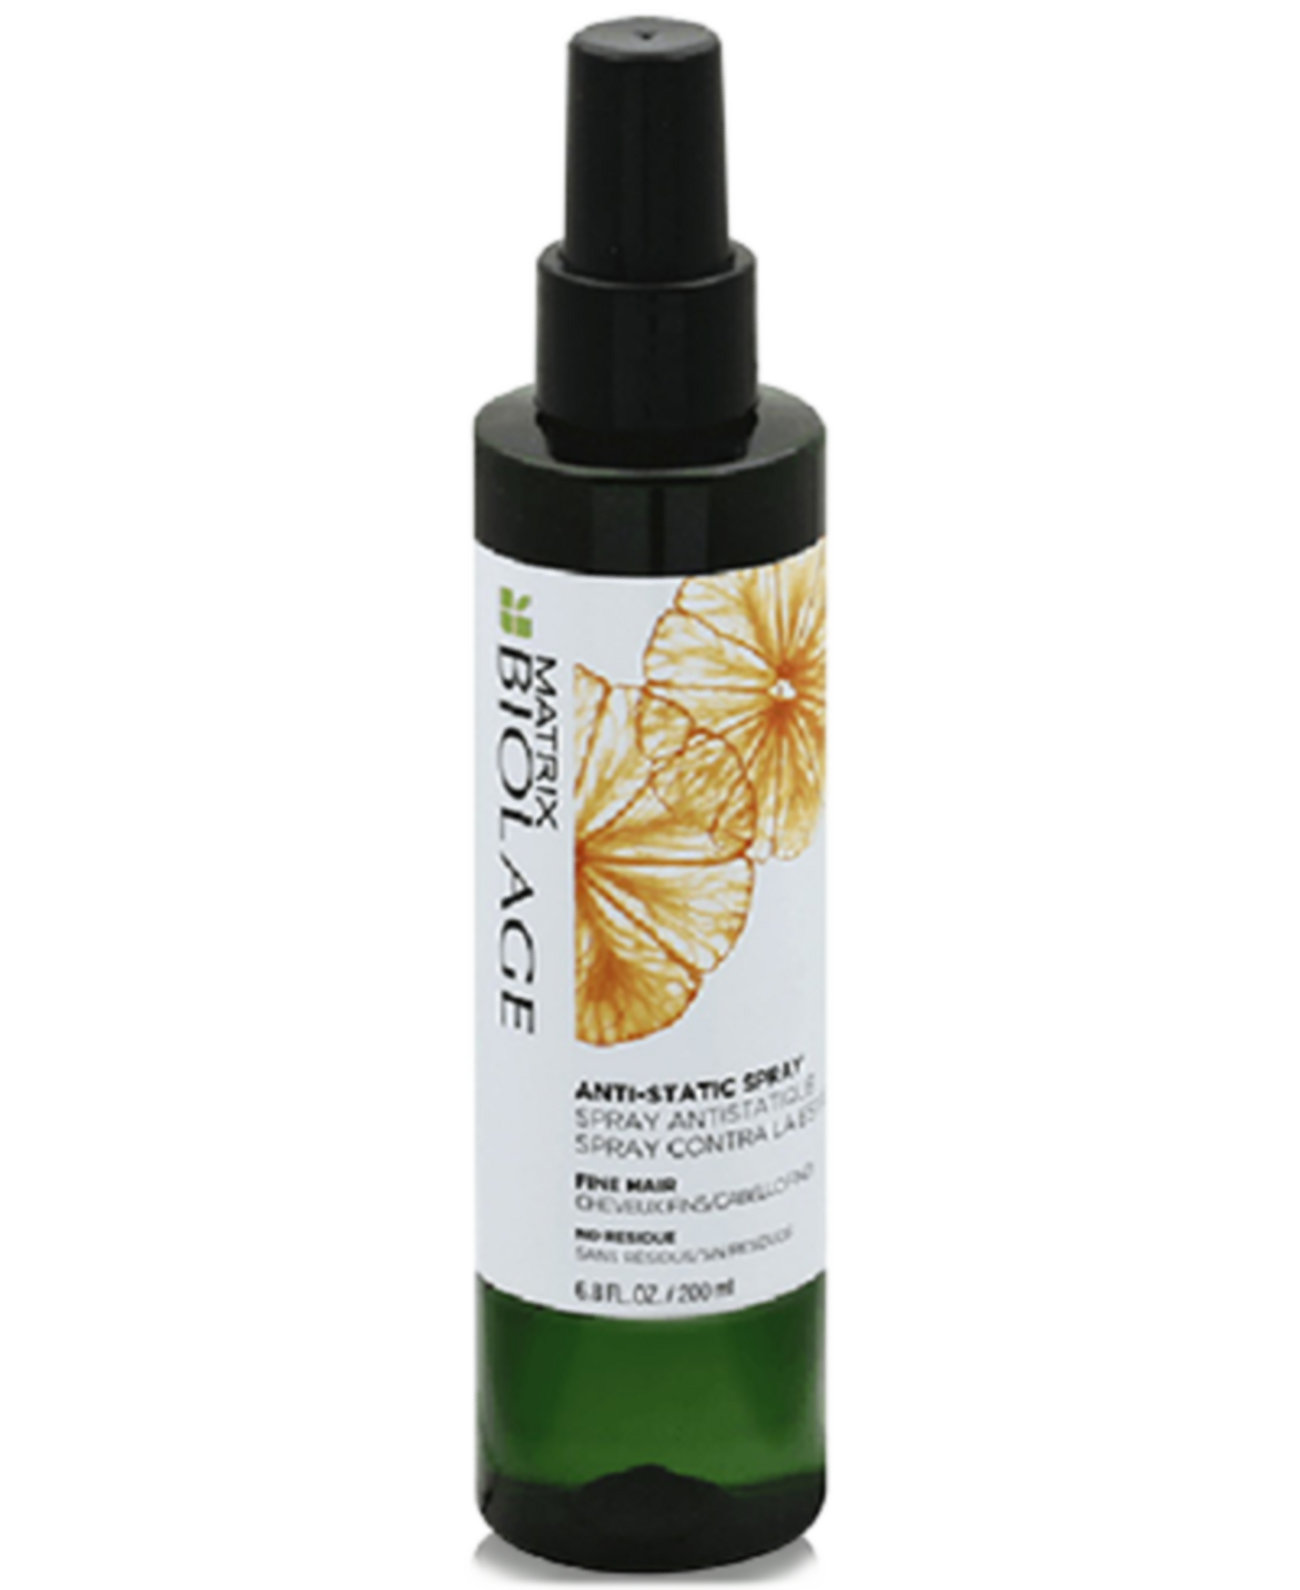 Антистатический спрей для тонких волос Biolage, 6,8 унции, от PUREBEAUTY Salon & Spa Matrix